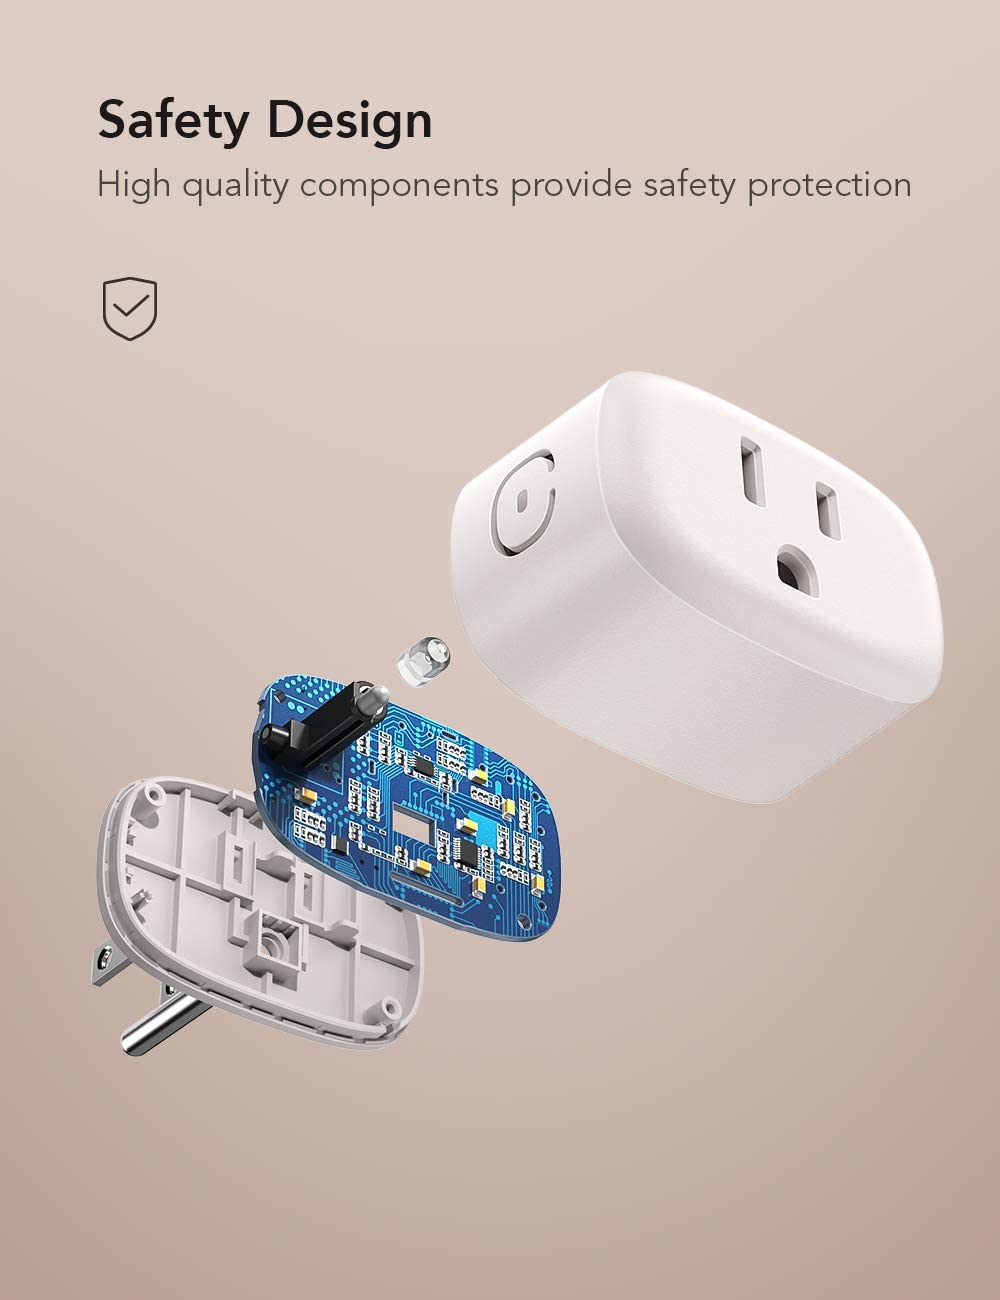 WHOLESALE NSP01Pro WiFi Smart Plug for Smart Home Works with Alexa & Apple HomeKit